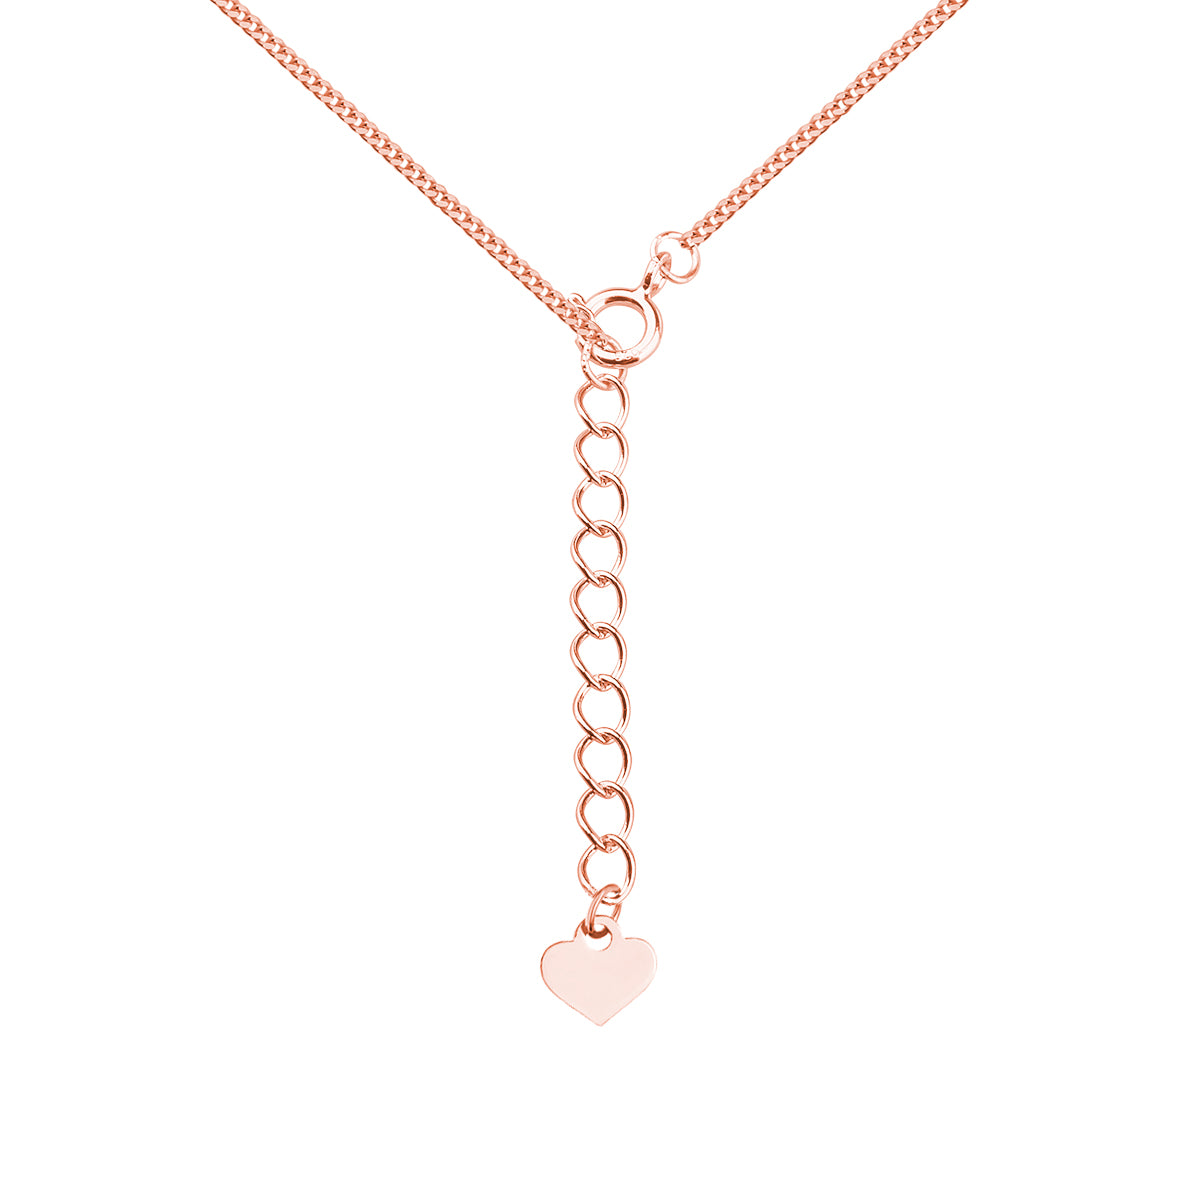 Rose Gold Chocker Necklace with beads - Amona Jewelry